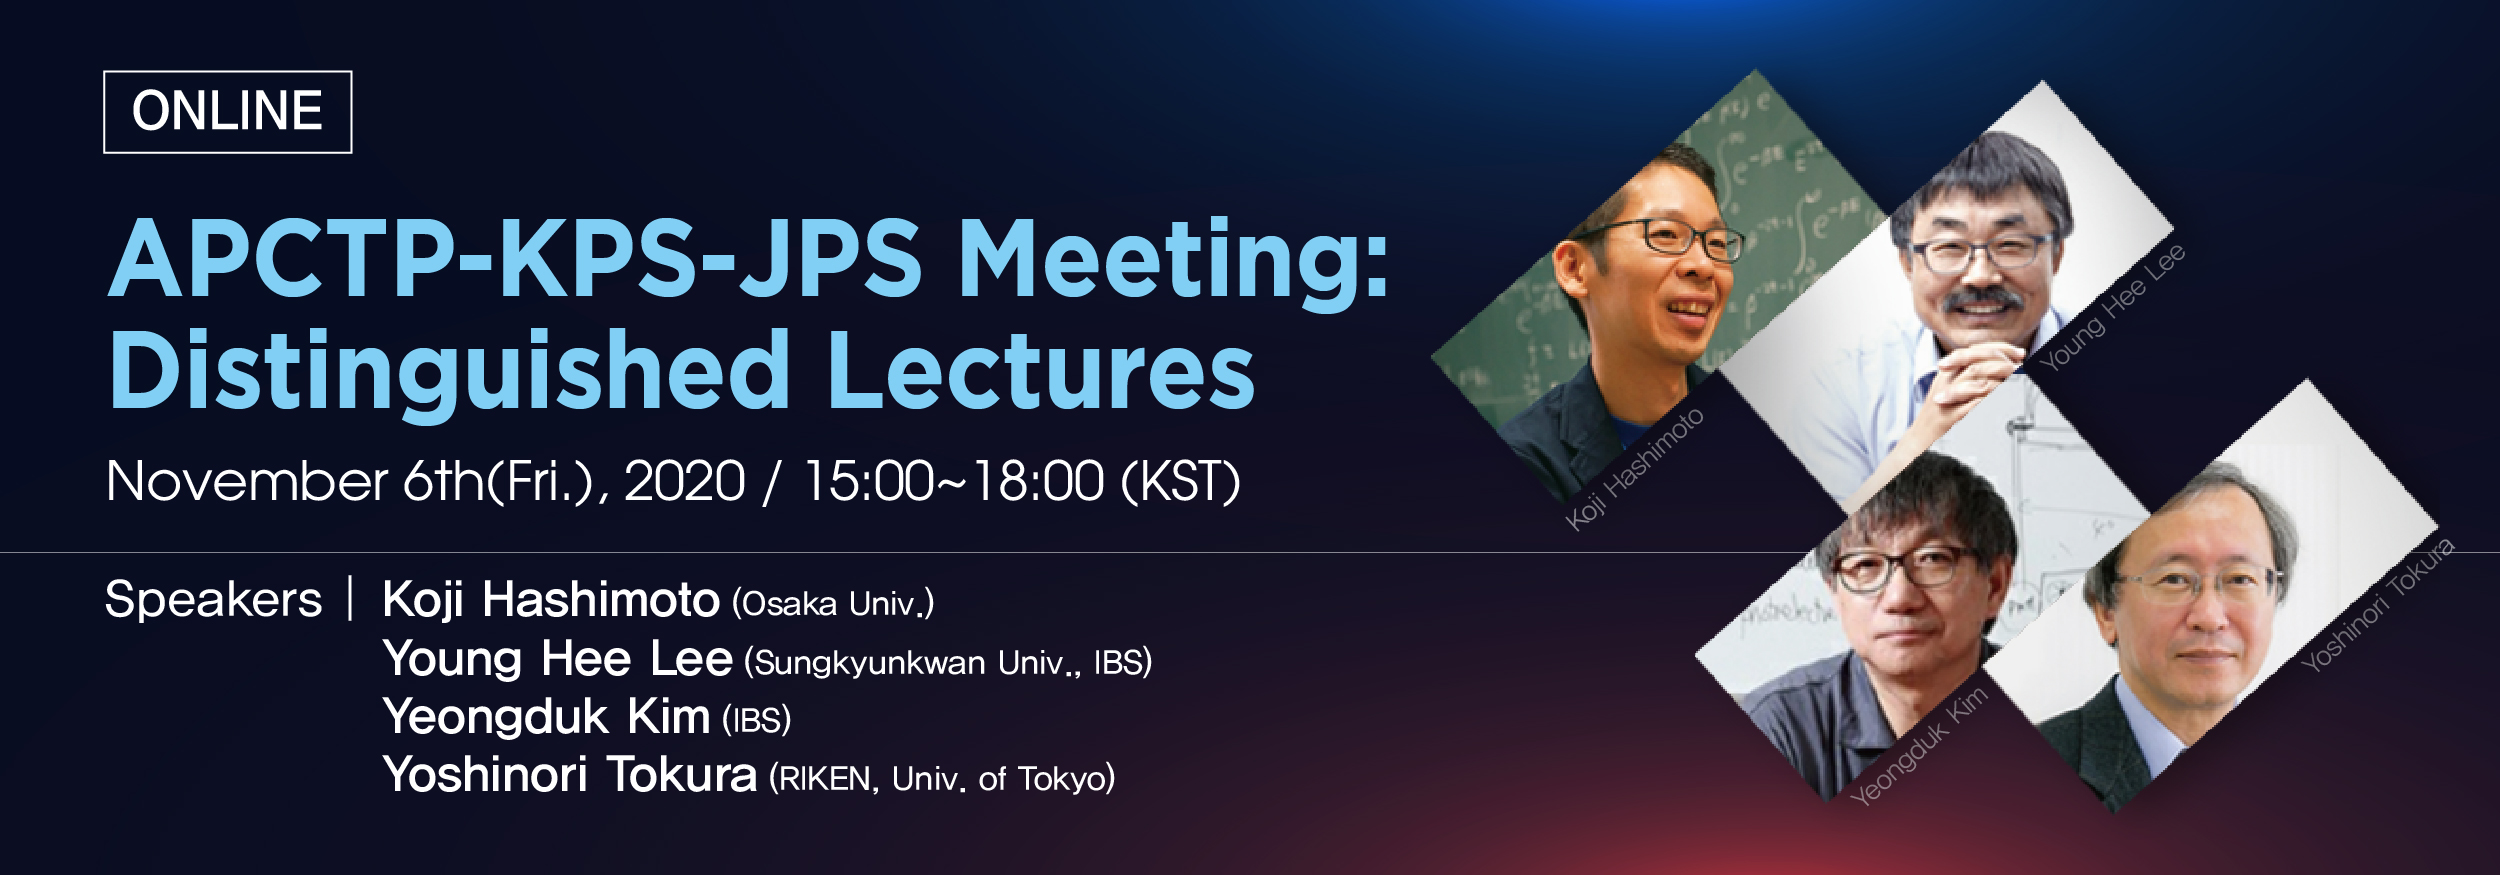 APCTP-KPS-JPS Meetings: Distinguished Lectures